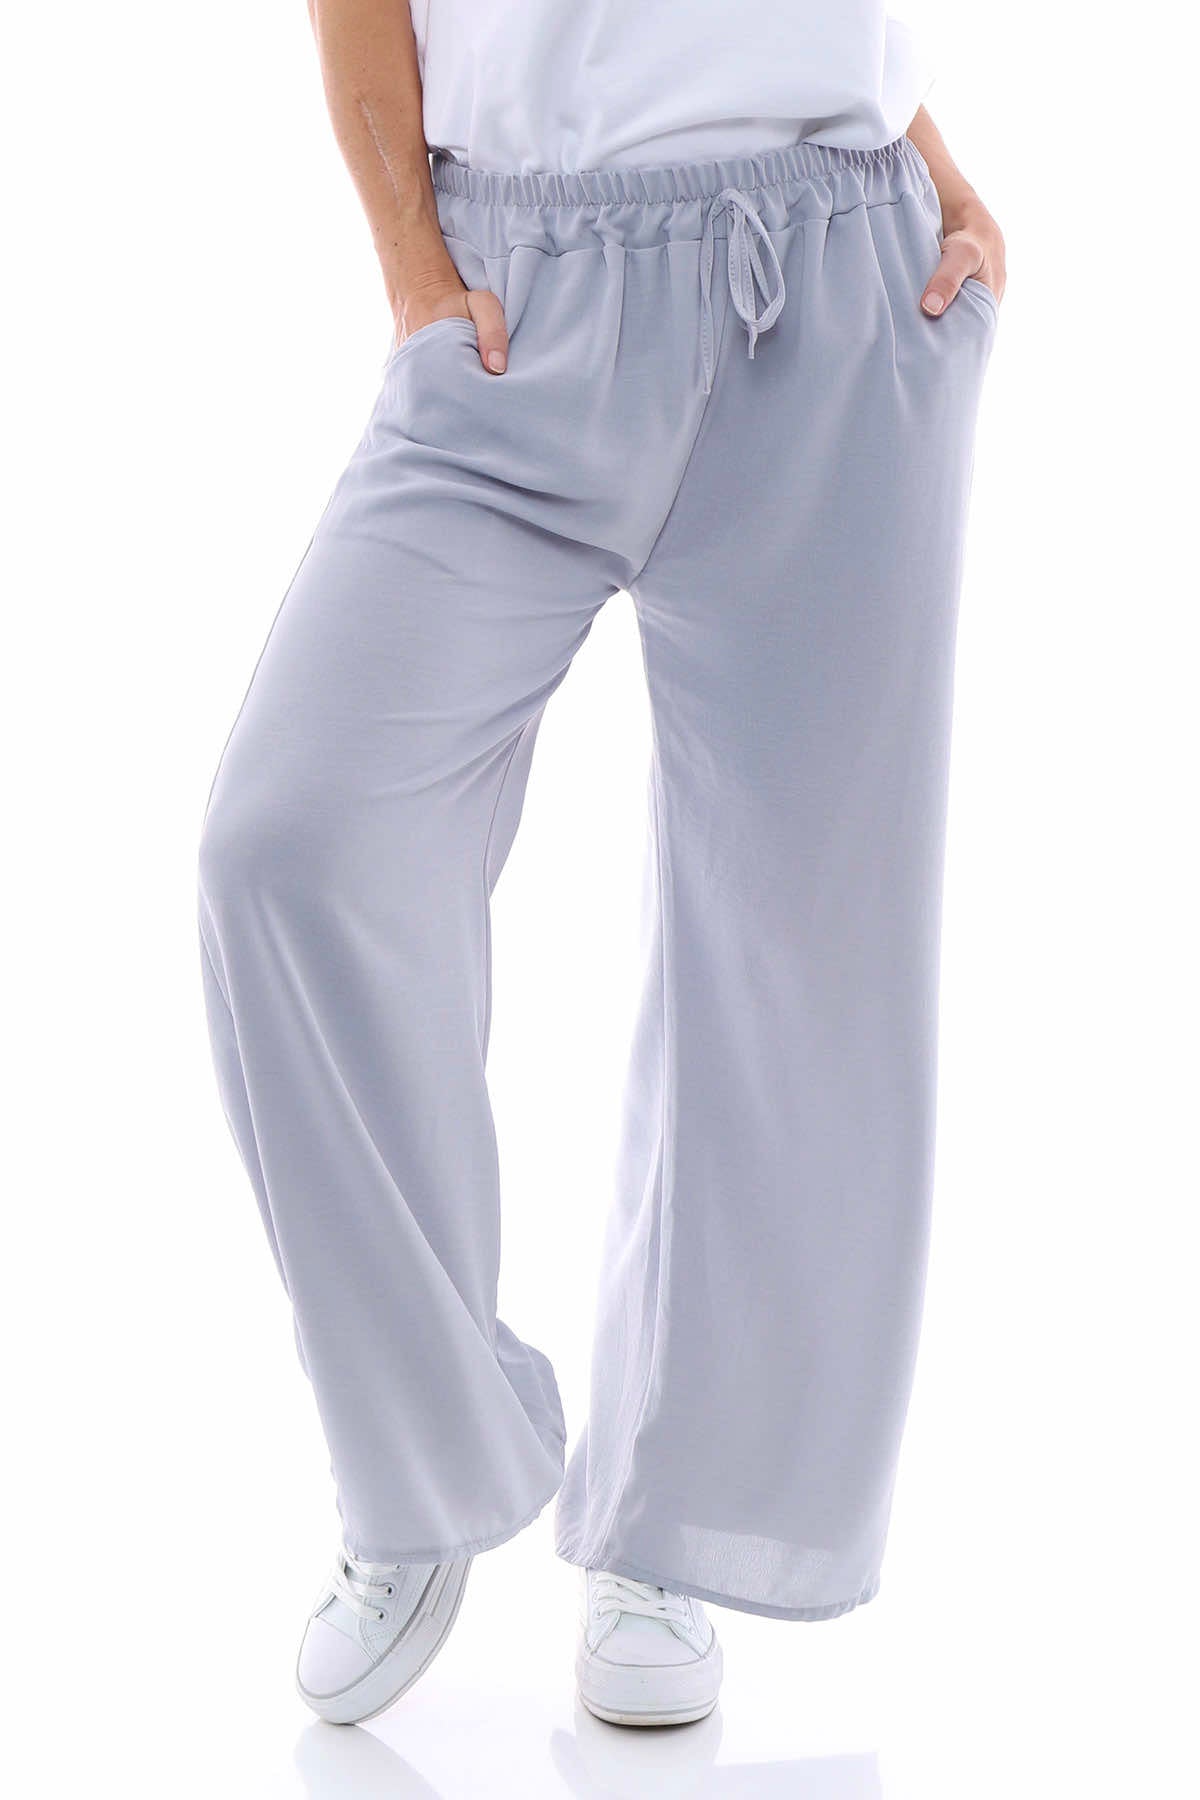 Ciara Trousers Grey